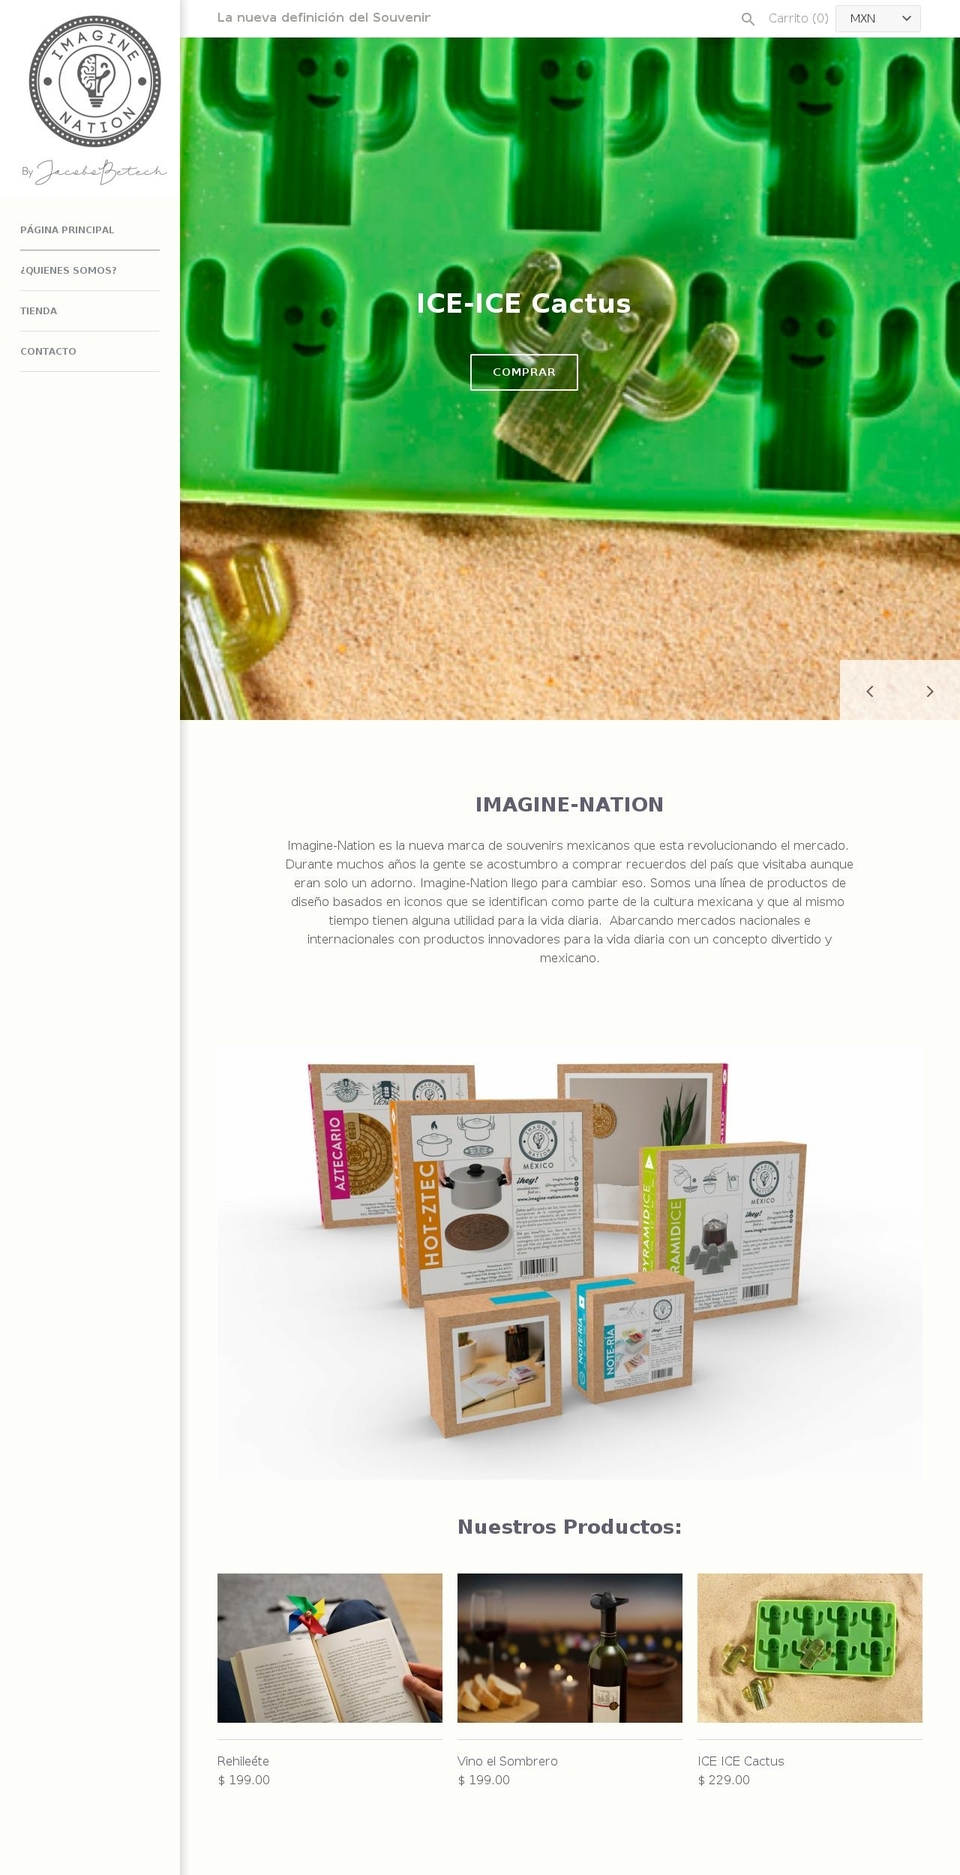 Imagine-NationMx Shopify theme site example imagine-nation.com.mx